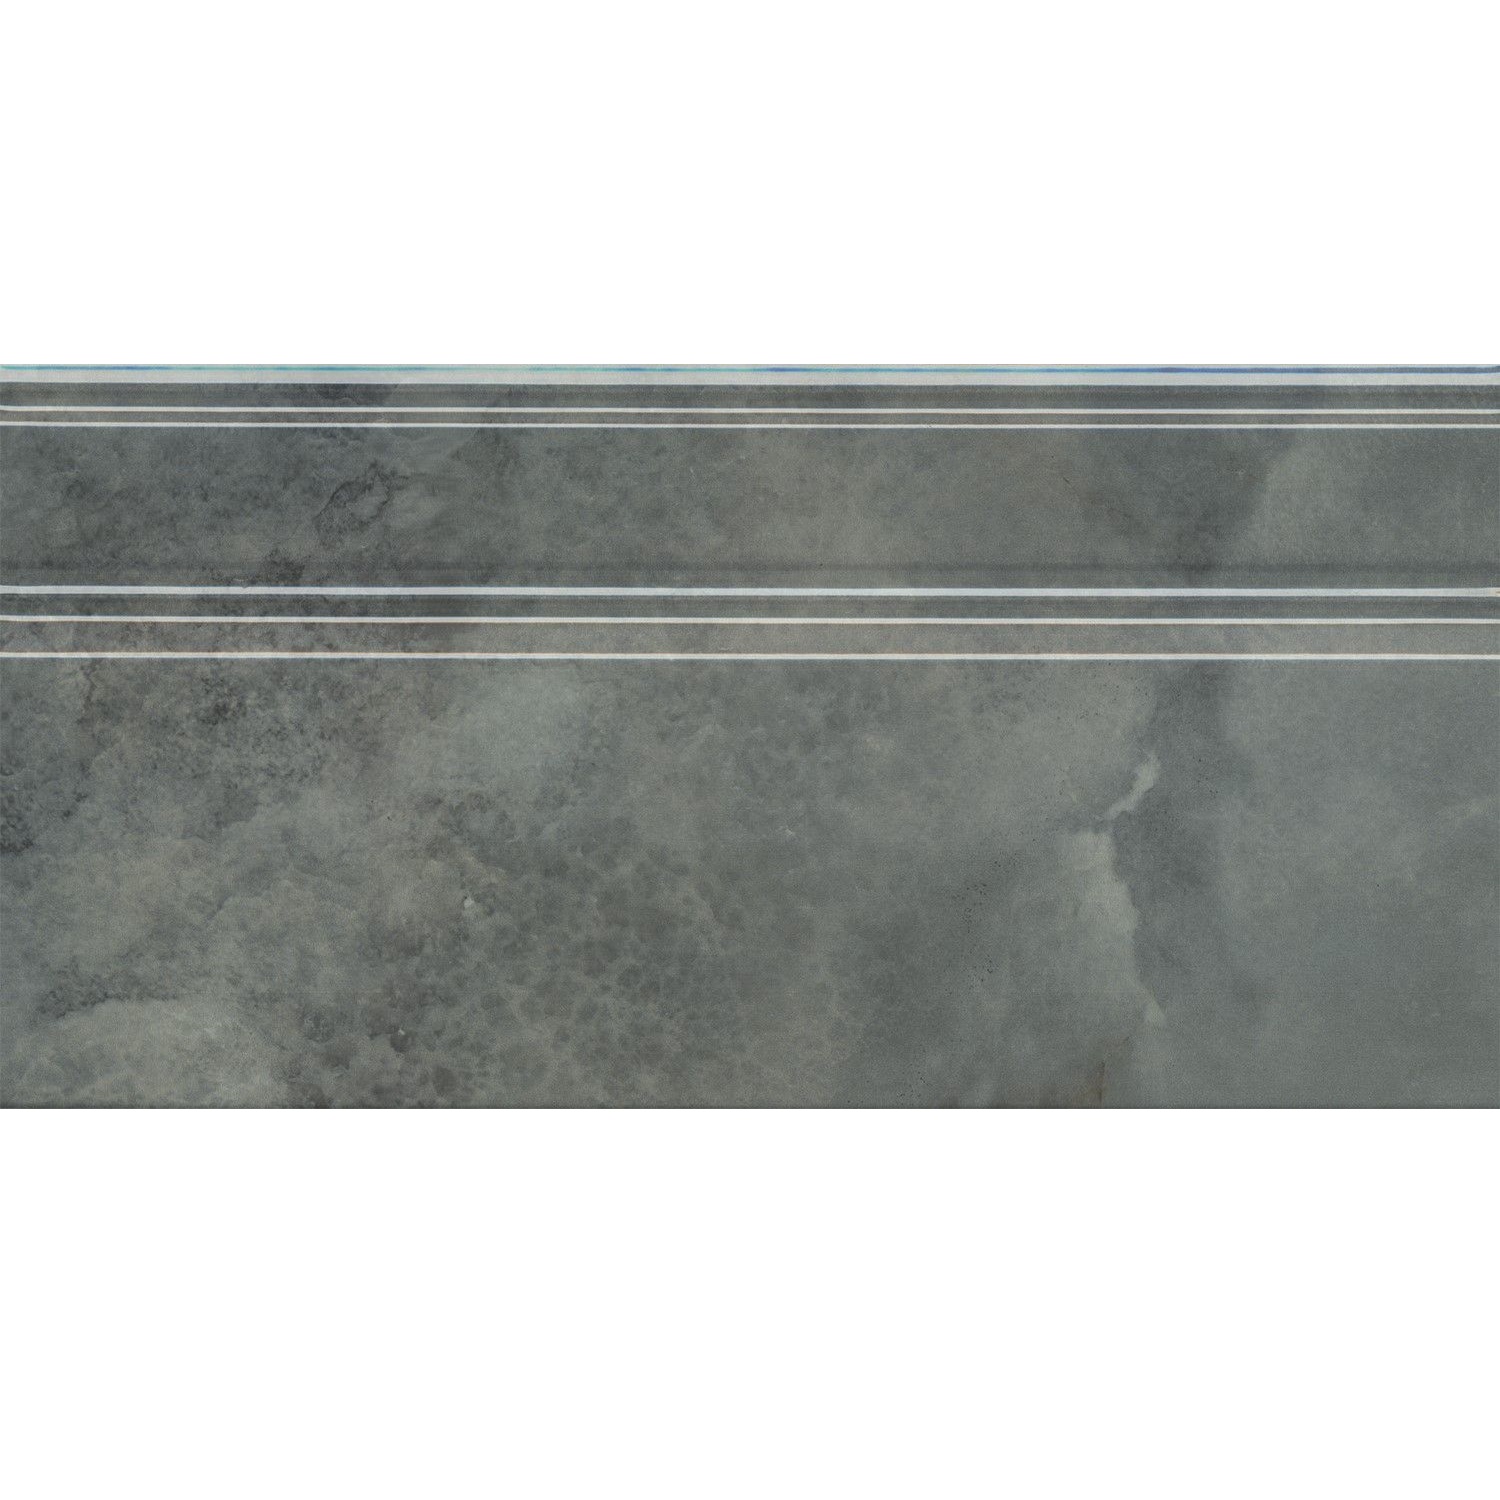 Плитка Kerama Marazzi Джардини плинтус серый темный FME010R 20x40x1,6 см плитка vitra marbleset 60х60 иллюжн темно серый